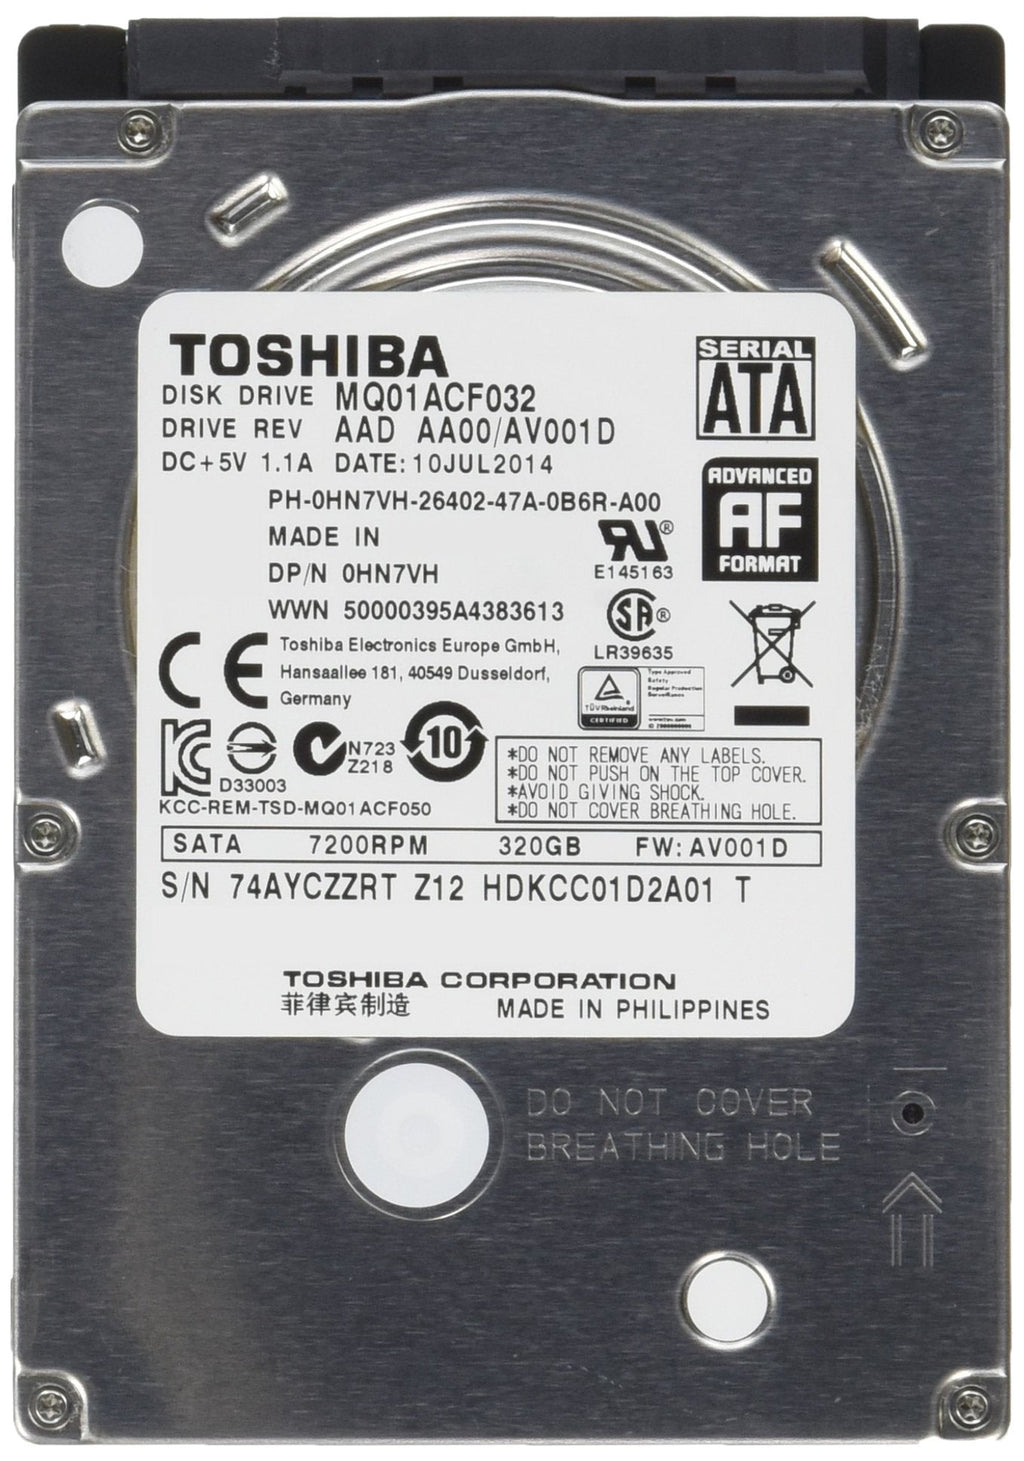  [AUSTRALIA] - Toshiba MQ01ACF032 320 GB 2.5" Internal Hard Drive